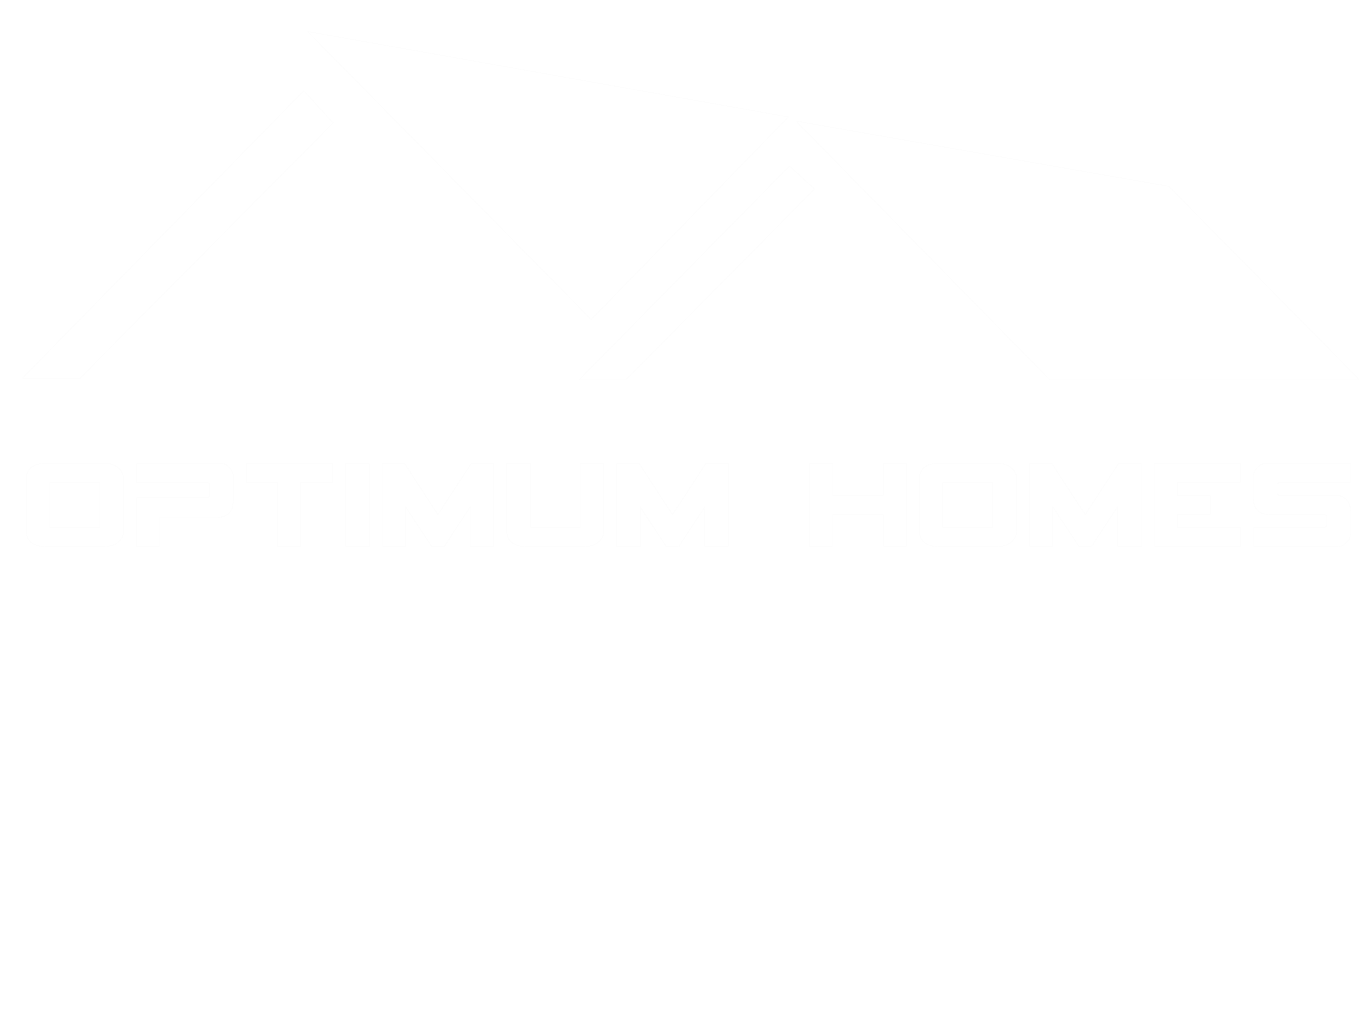 OPTIMUM HOMES